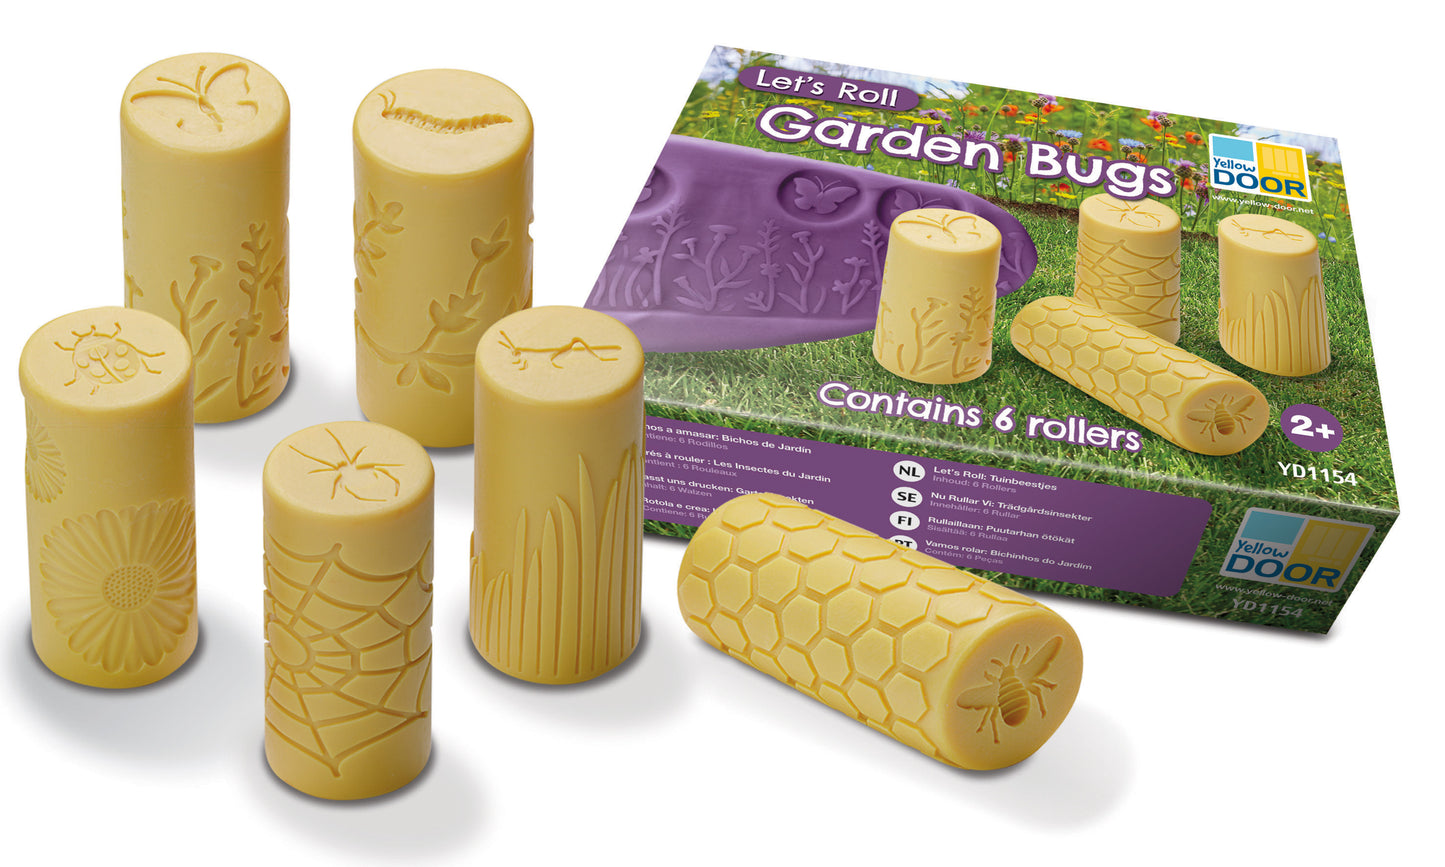 1 left! Garden Bugs Rollers & Stampers (set of 6)